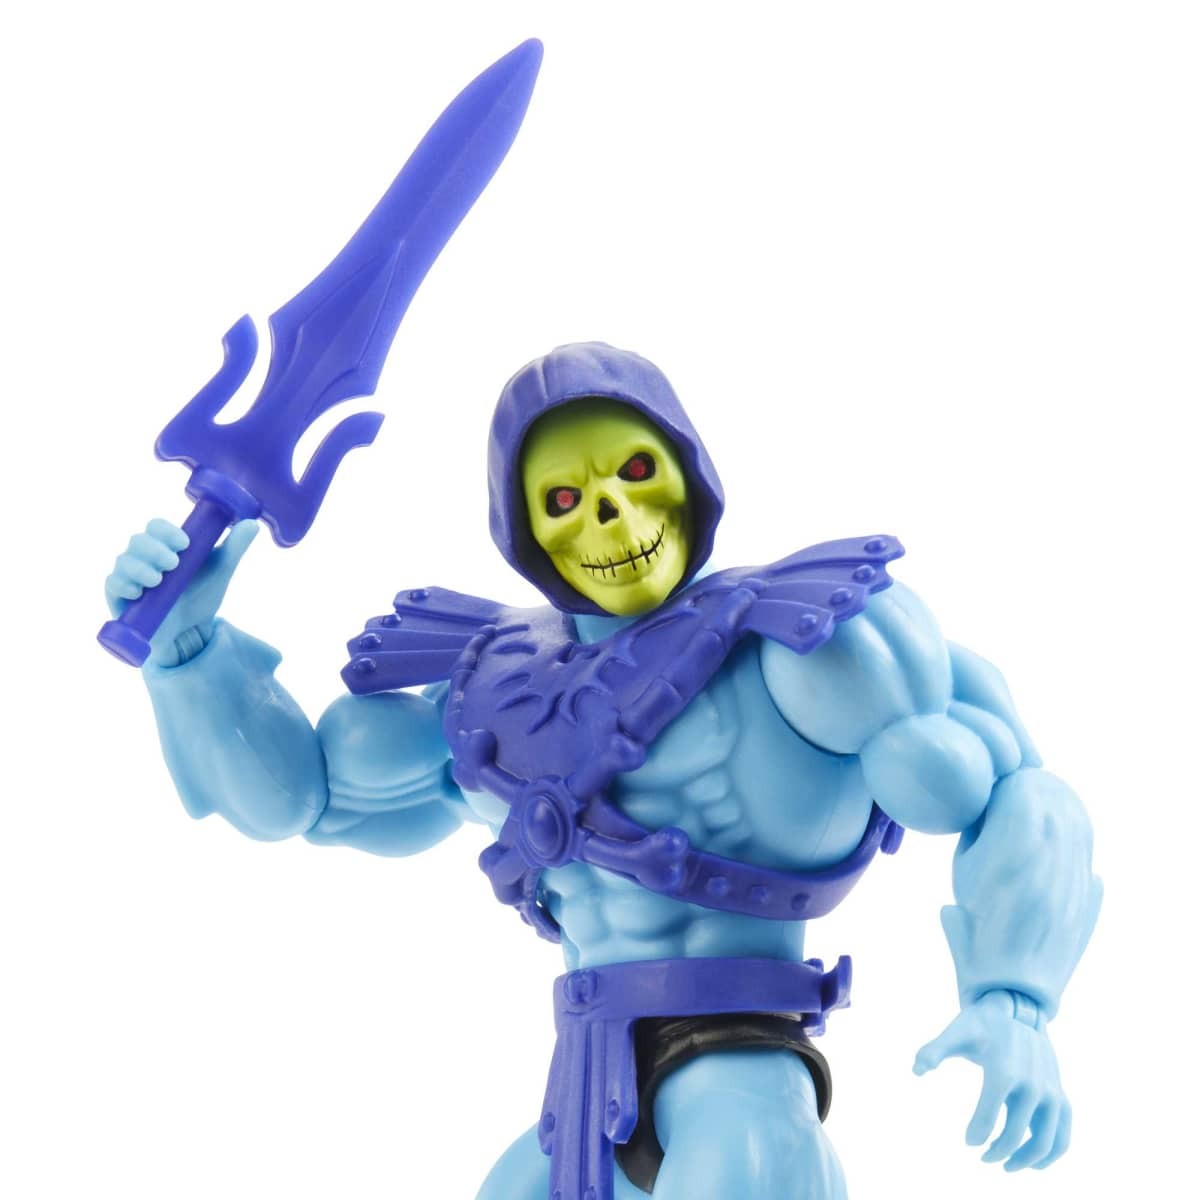 Masters Of The Universe Origins Action Figure - Skeletor